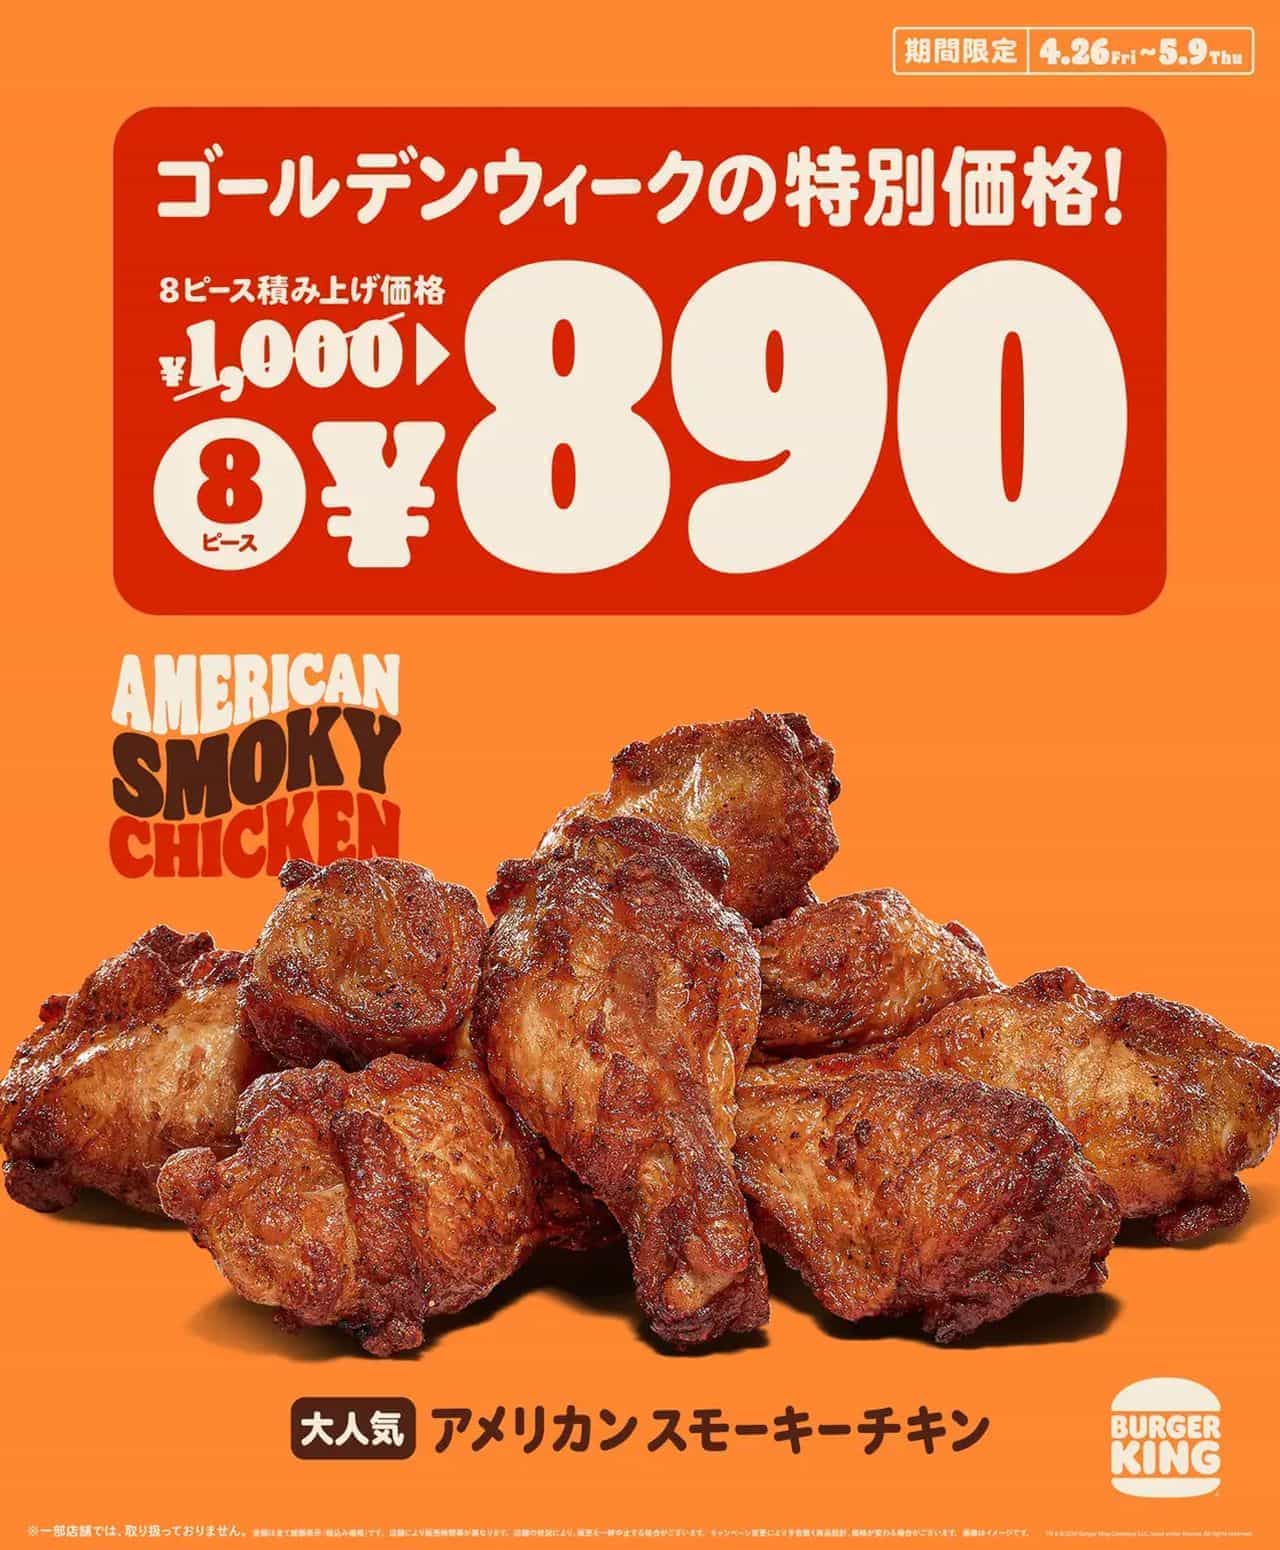 Burger King "American Smoky Chicken